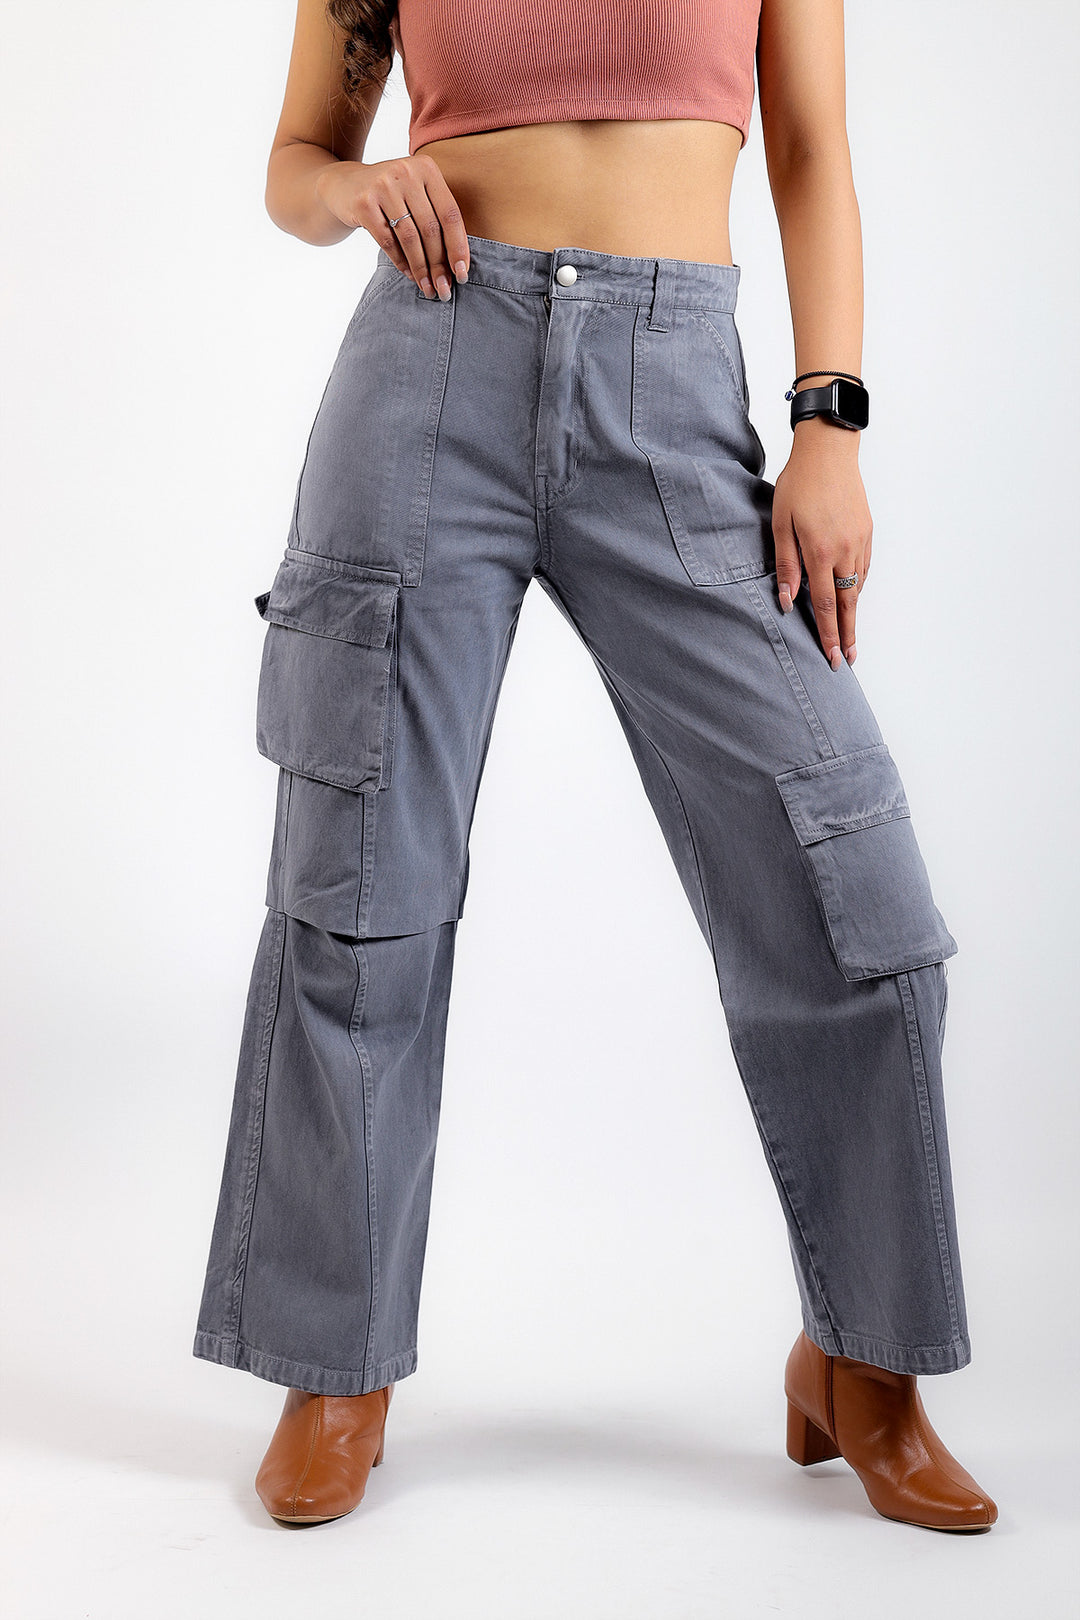 Fashionable Women's Cargo Jeans